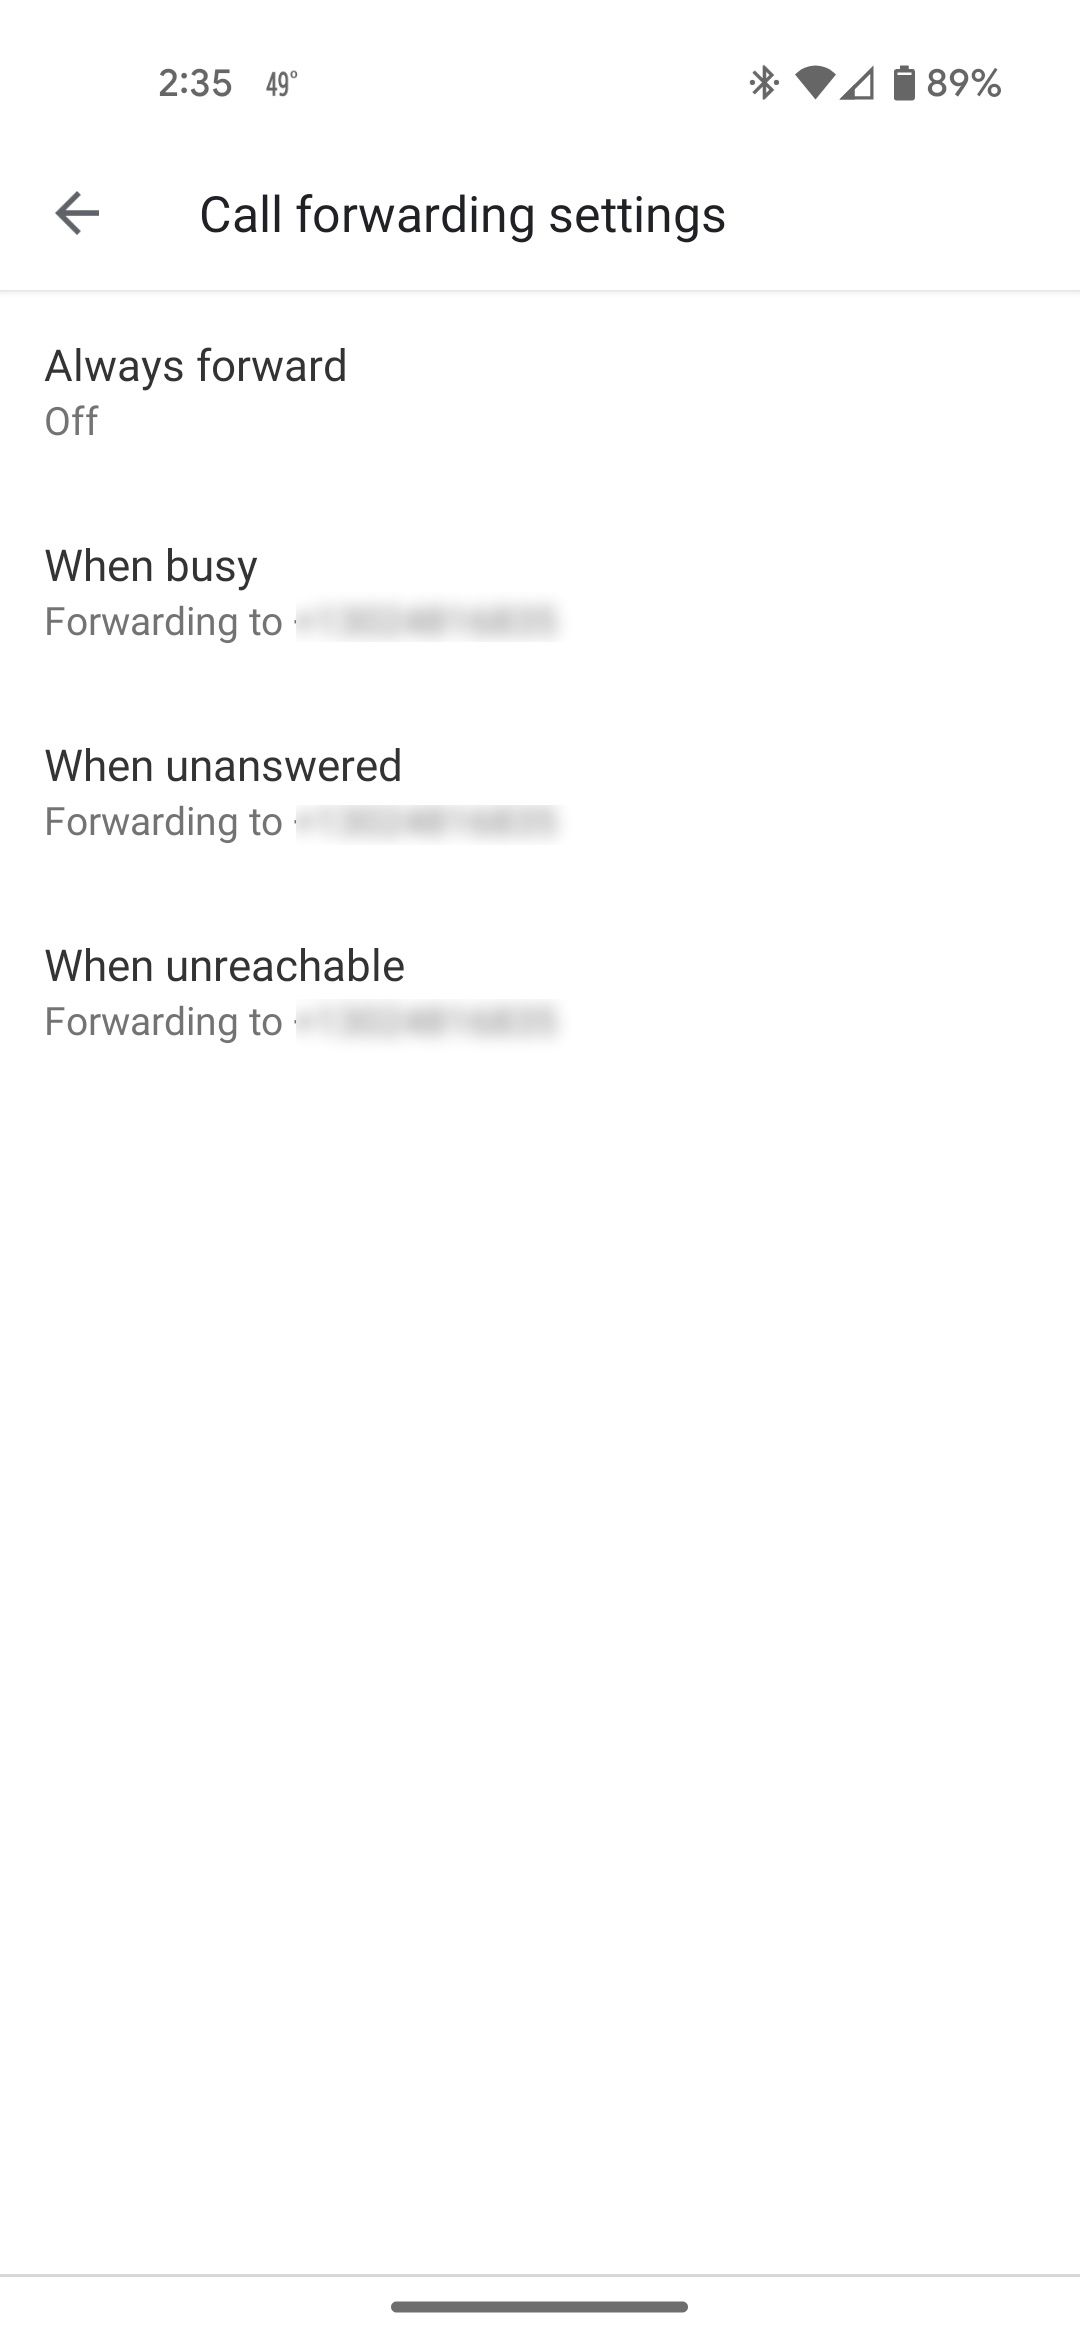 Call forward settings in Android phone app